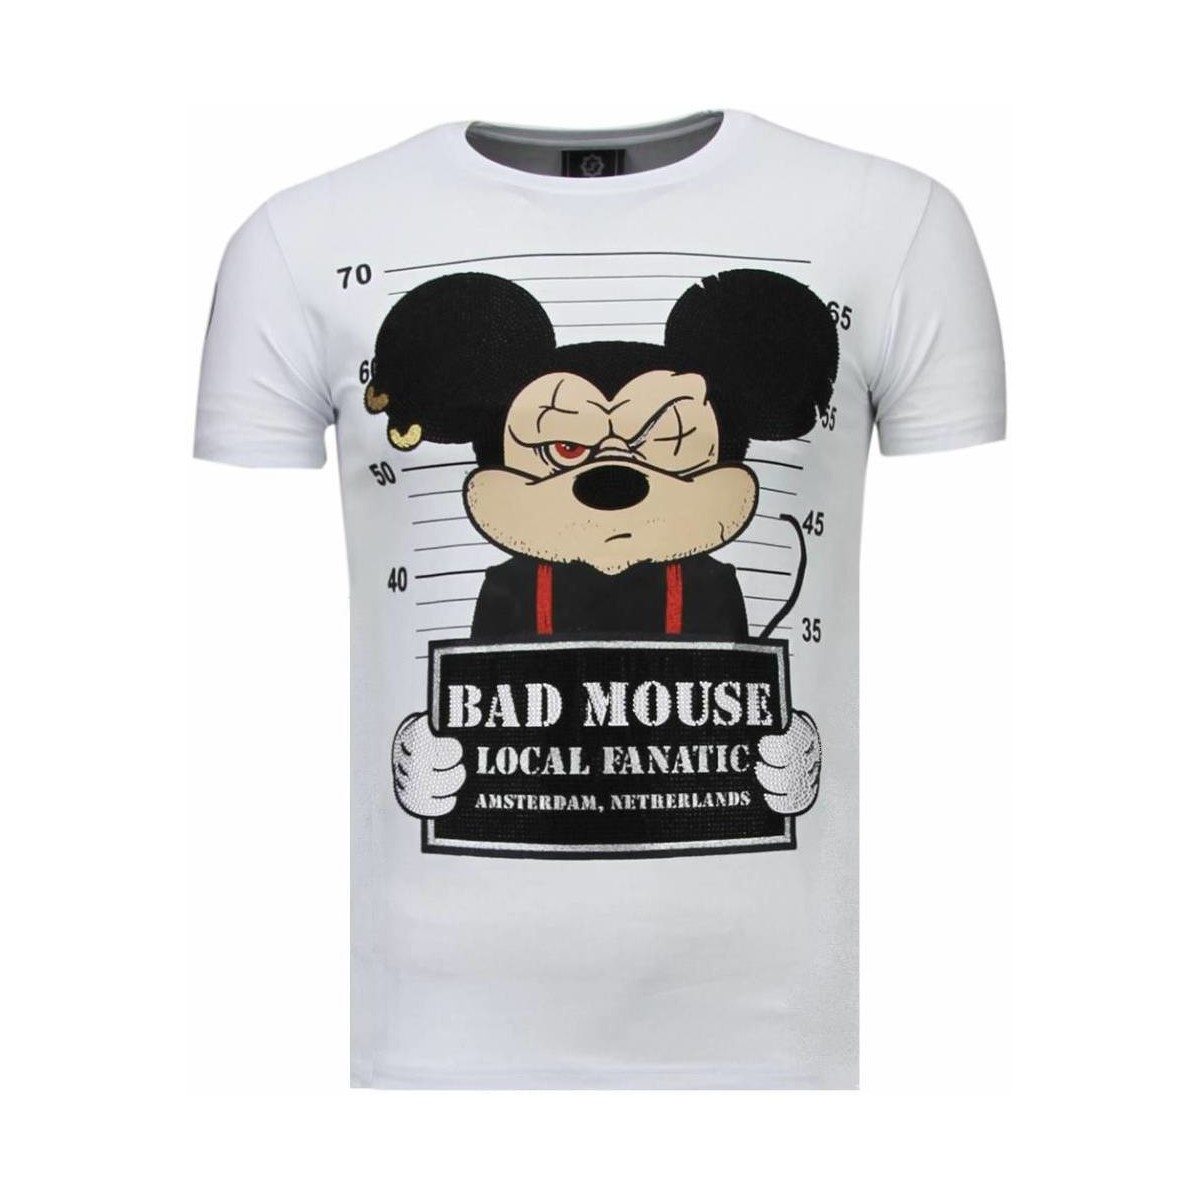 textil Herr T-shirts Local Fanatic State Prison Bad Mouse Rhinestone Vit